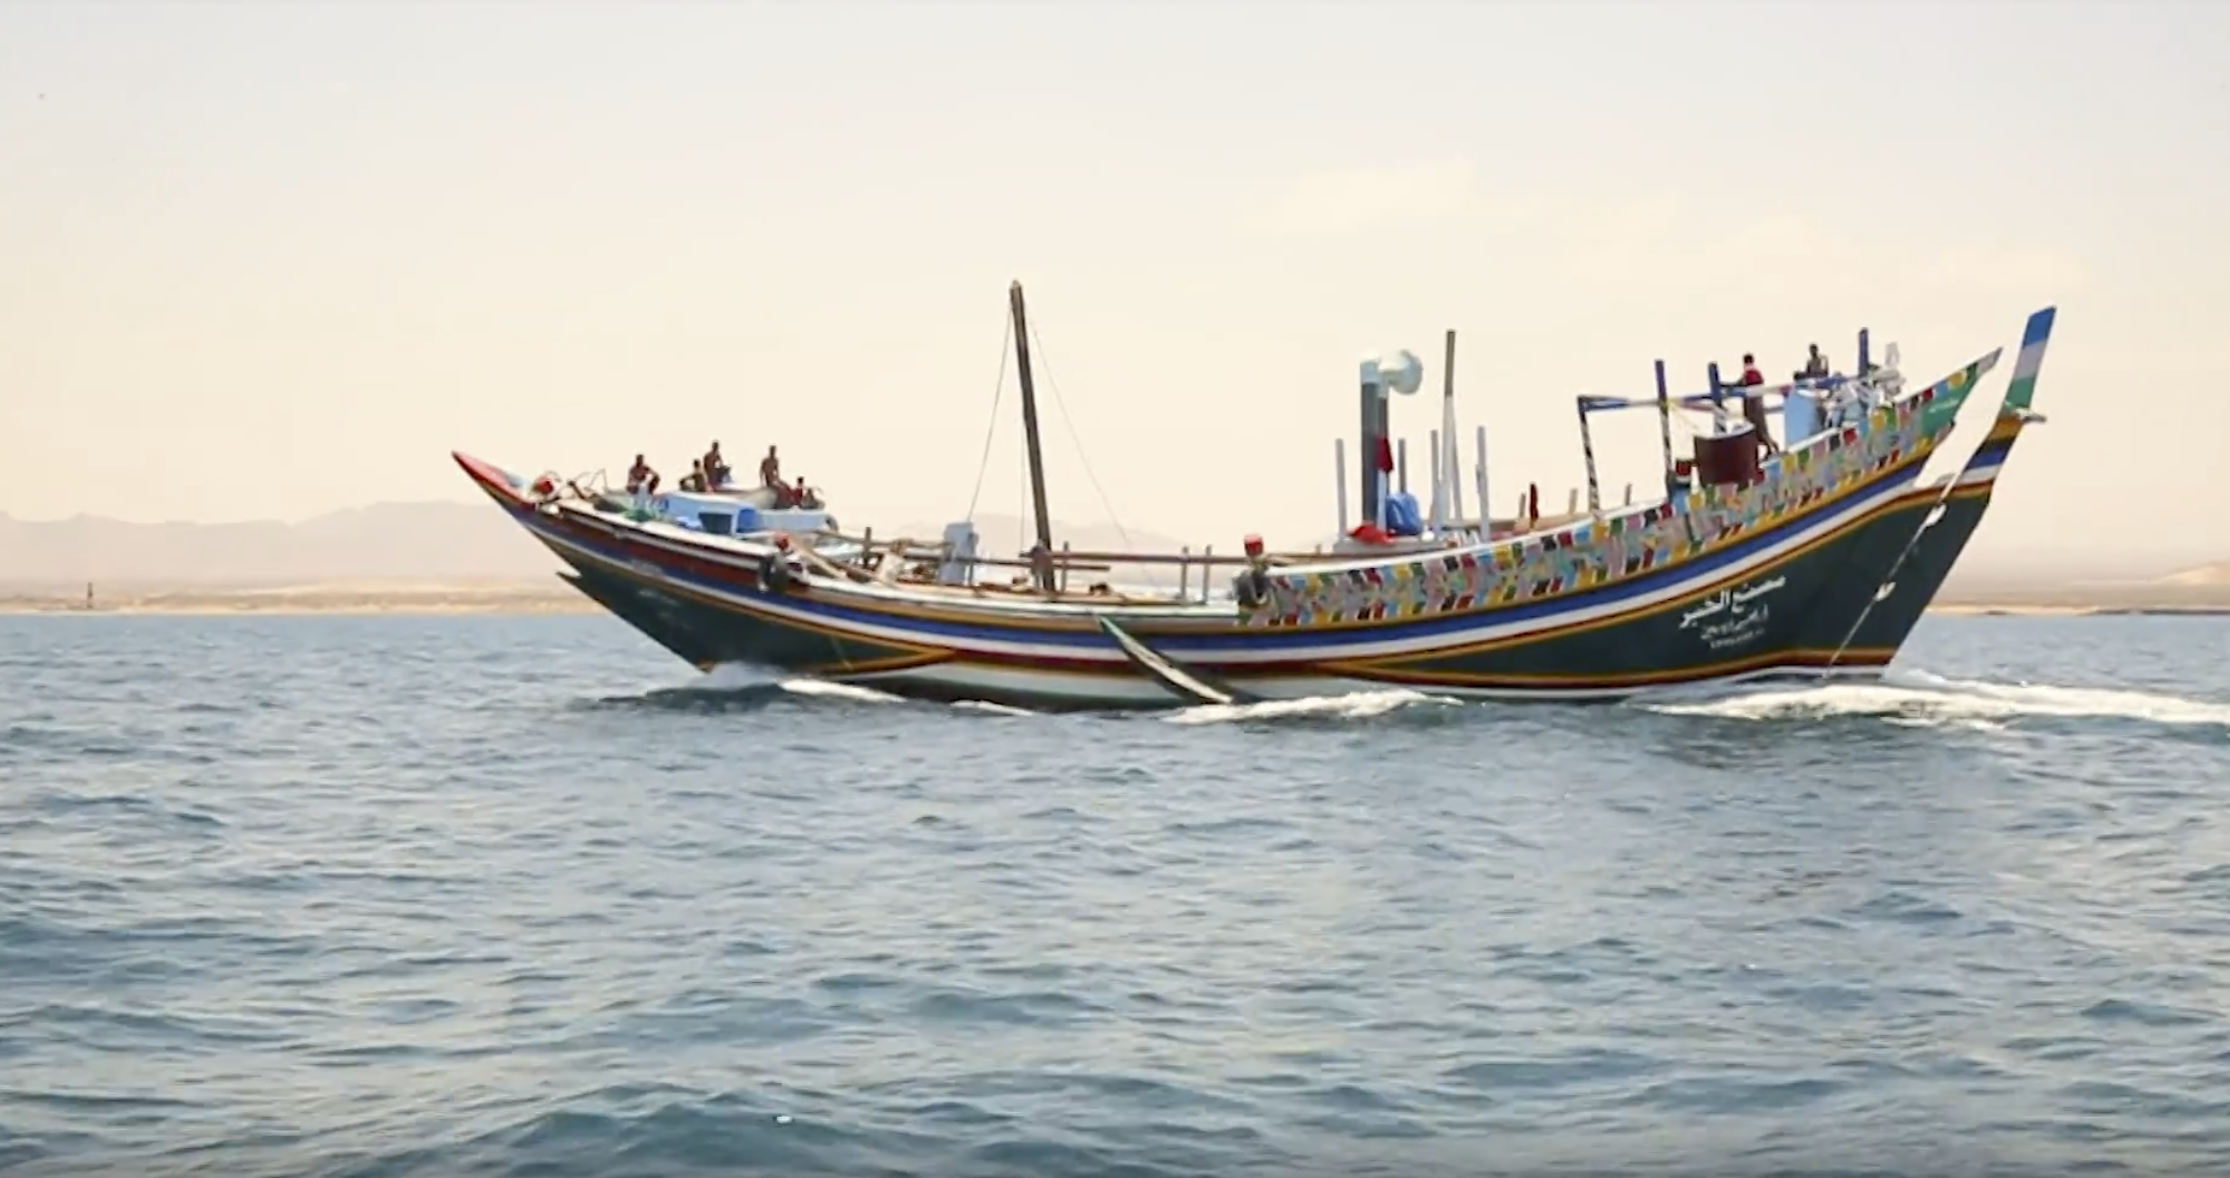 VIDEO: Inside Somali Fishing